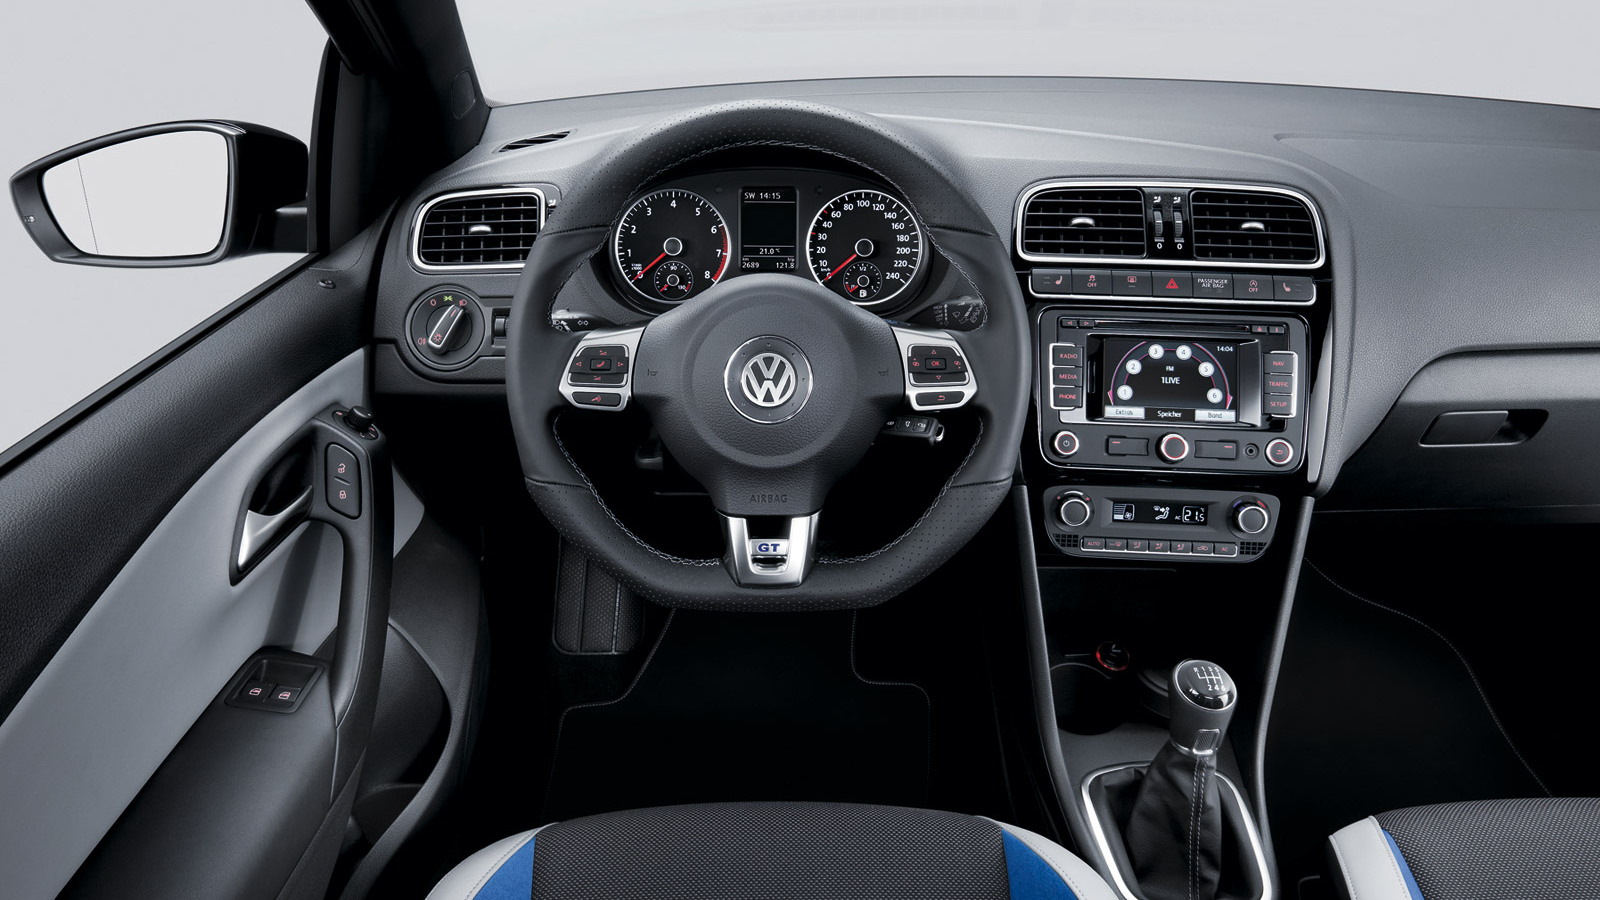 Volkswagen Polo Blue GT